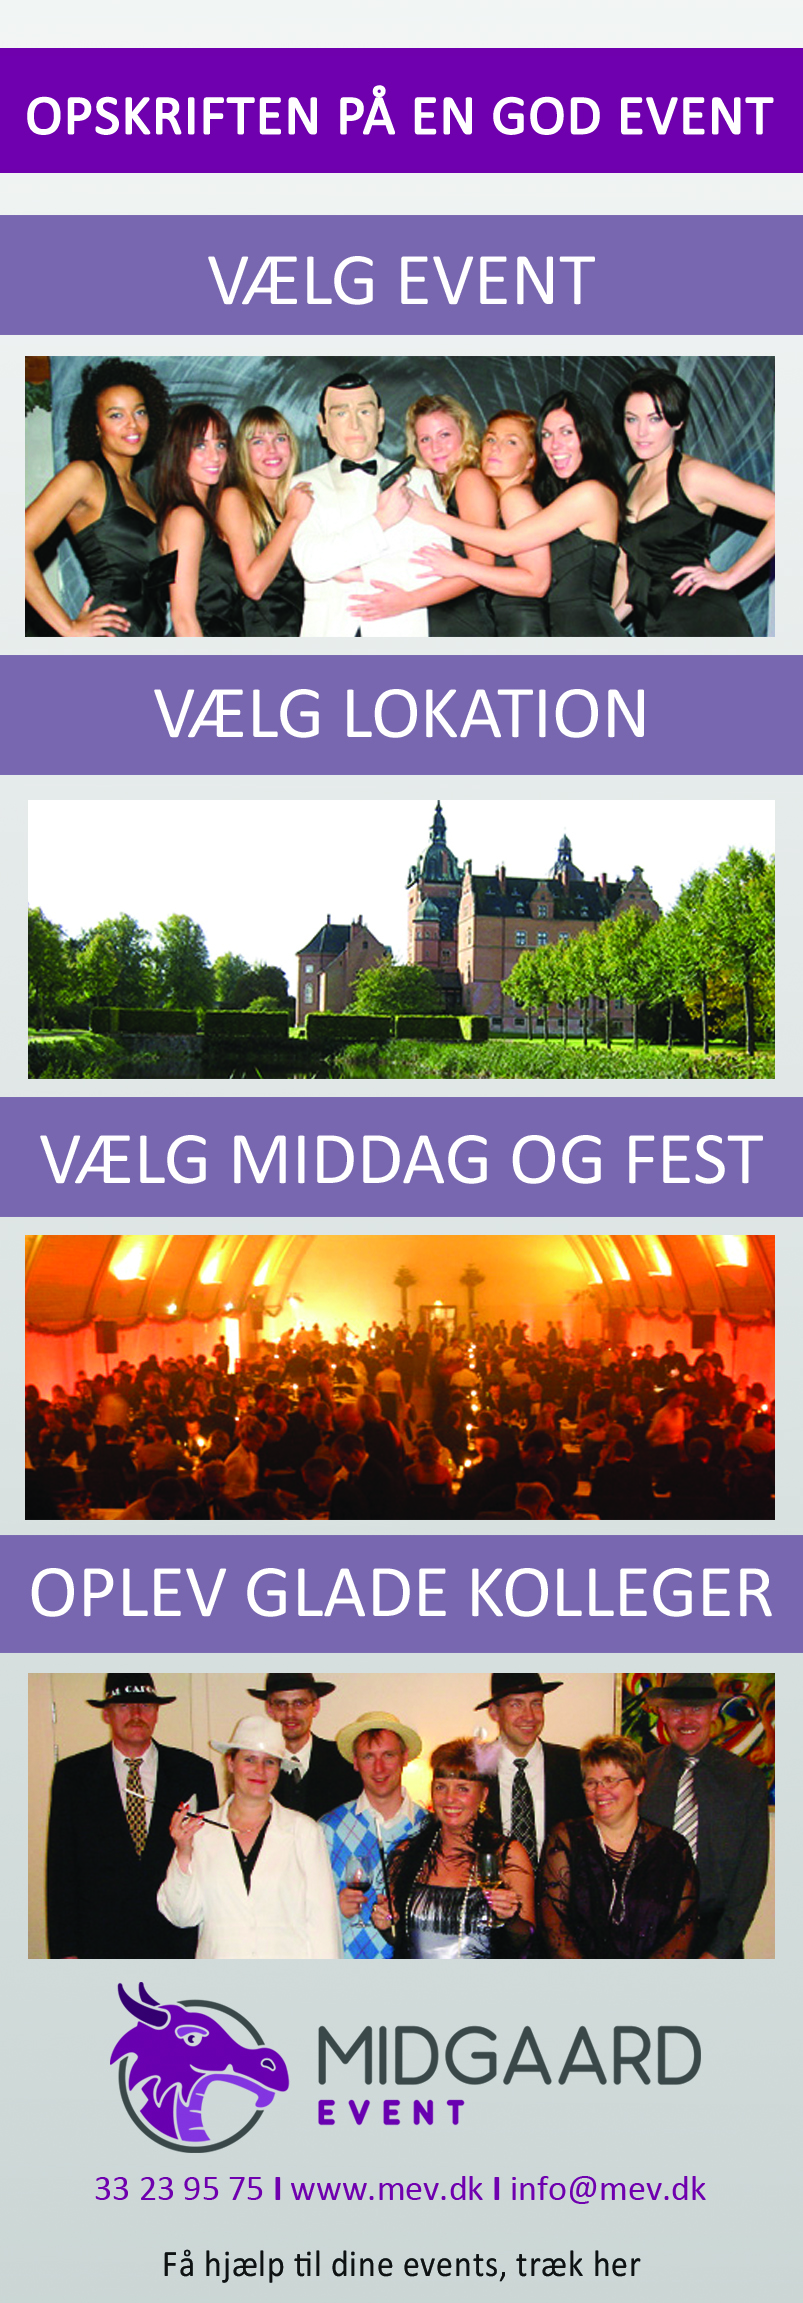 Midgaard Event